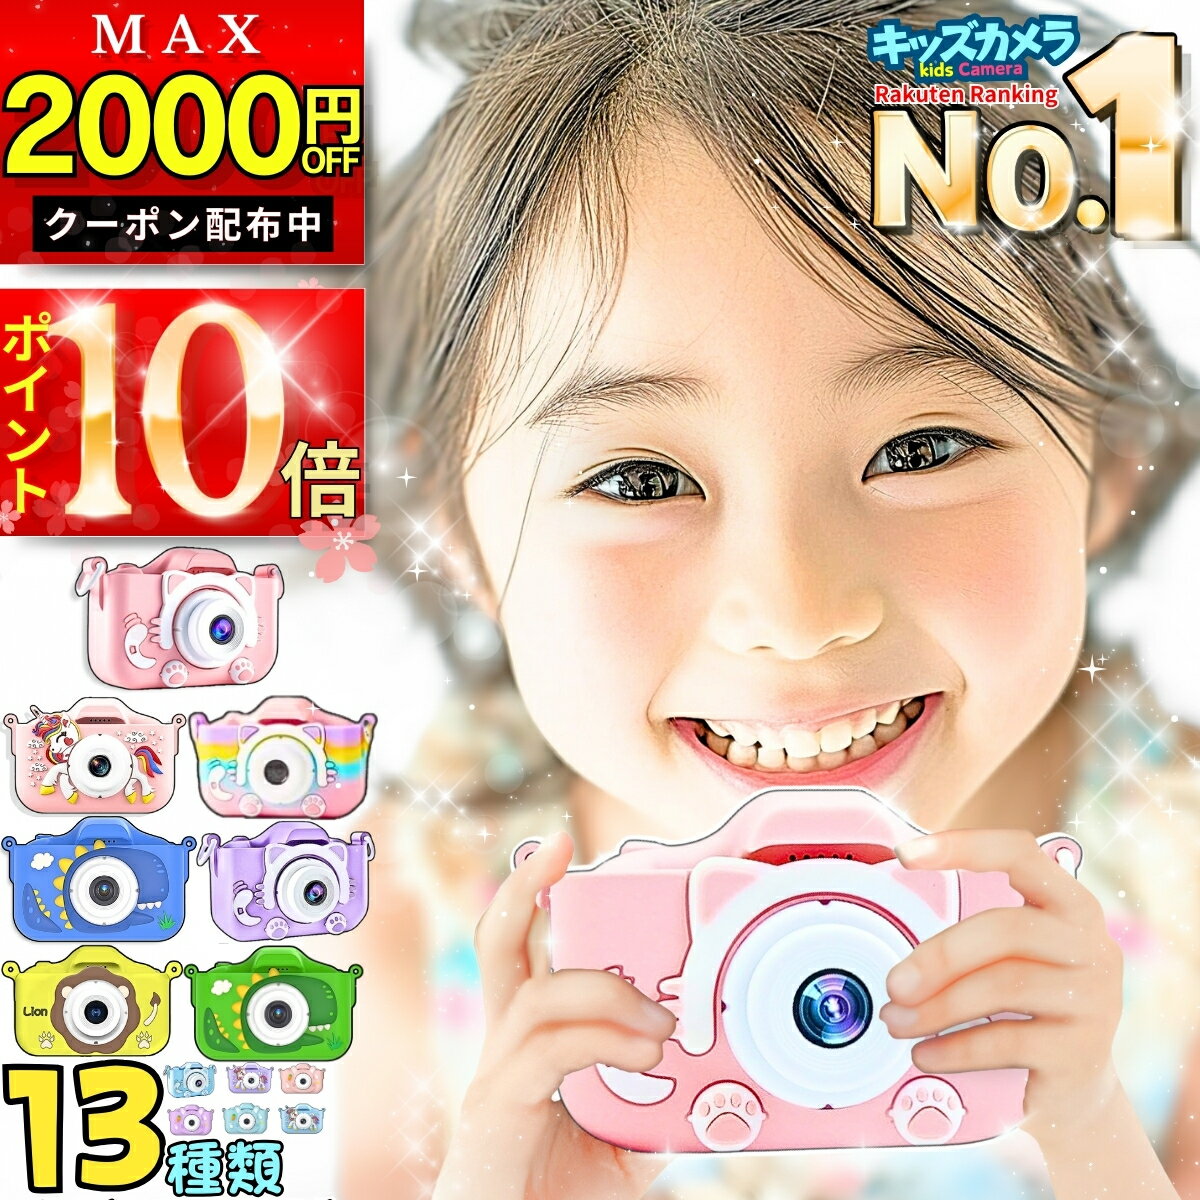 .co,jp Kenko デジタルトイカメラ Pieni II ピーチ キーホルダーセット 131万画素 写真・動画撮機能 microSDカードスロット 144336